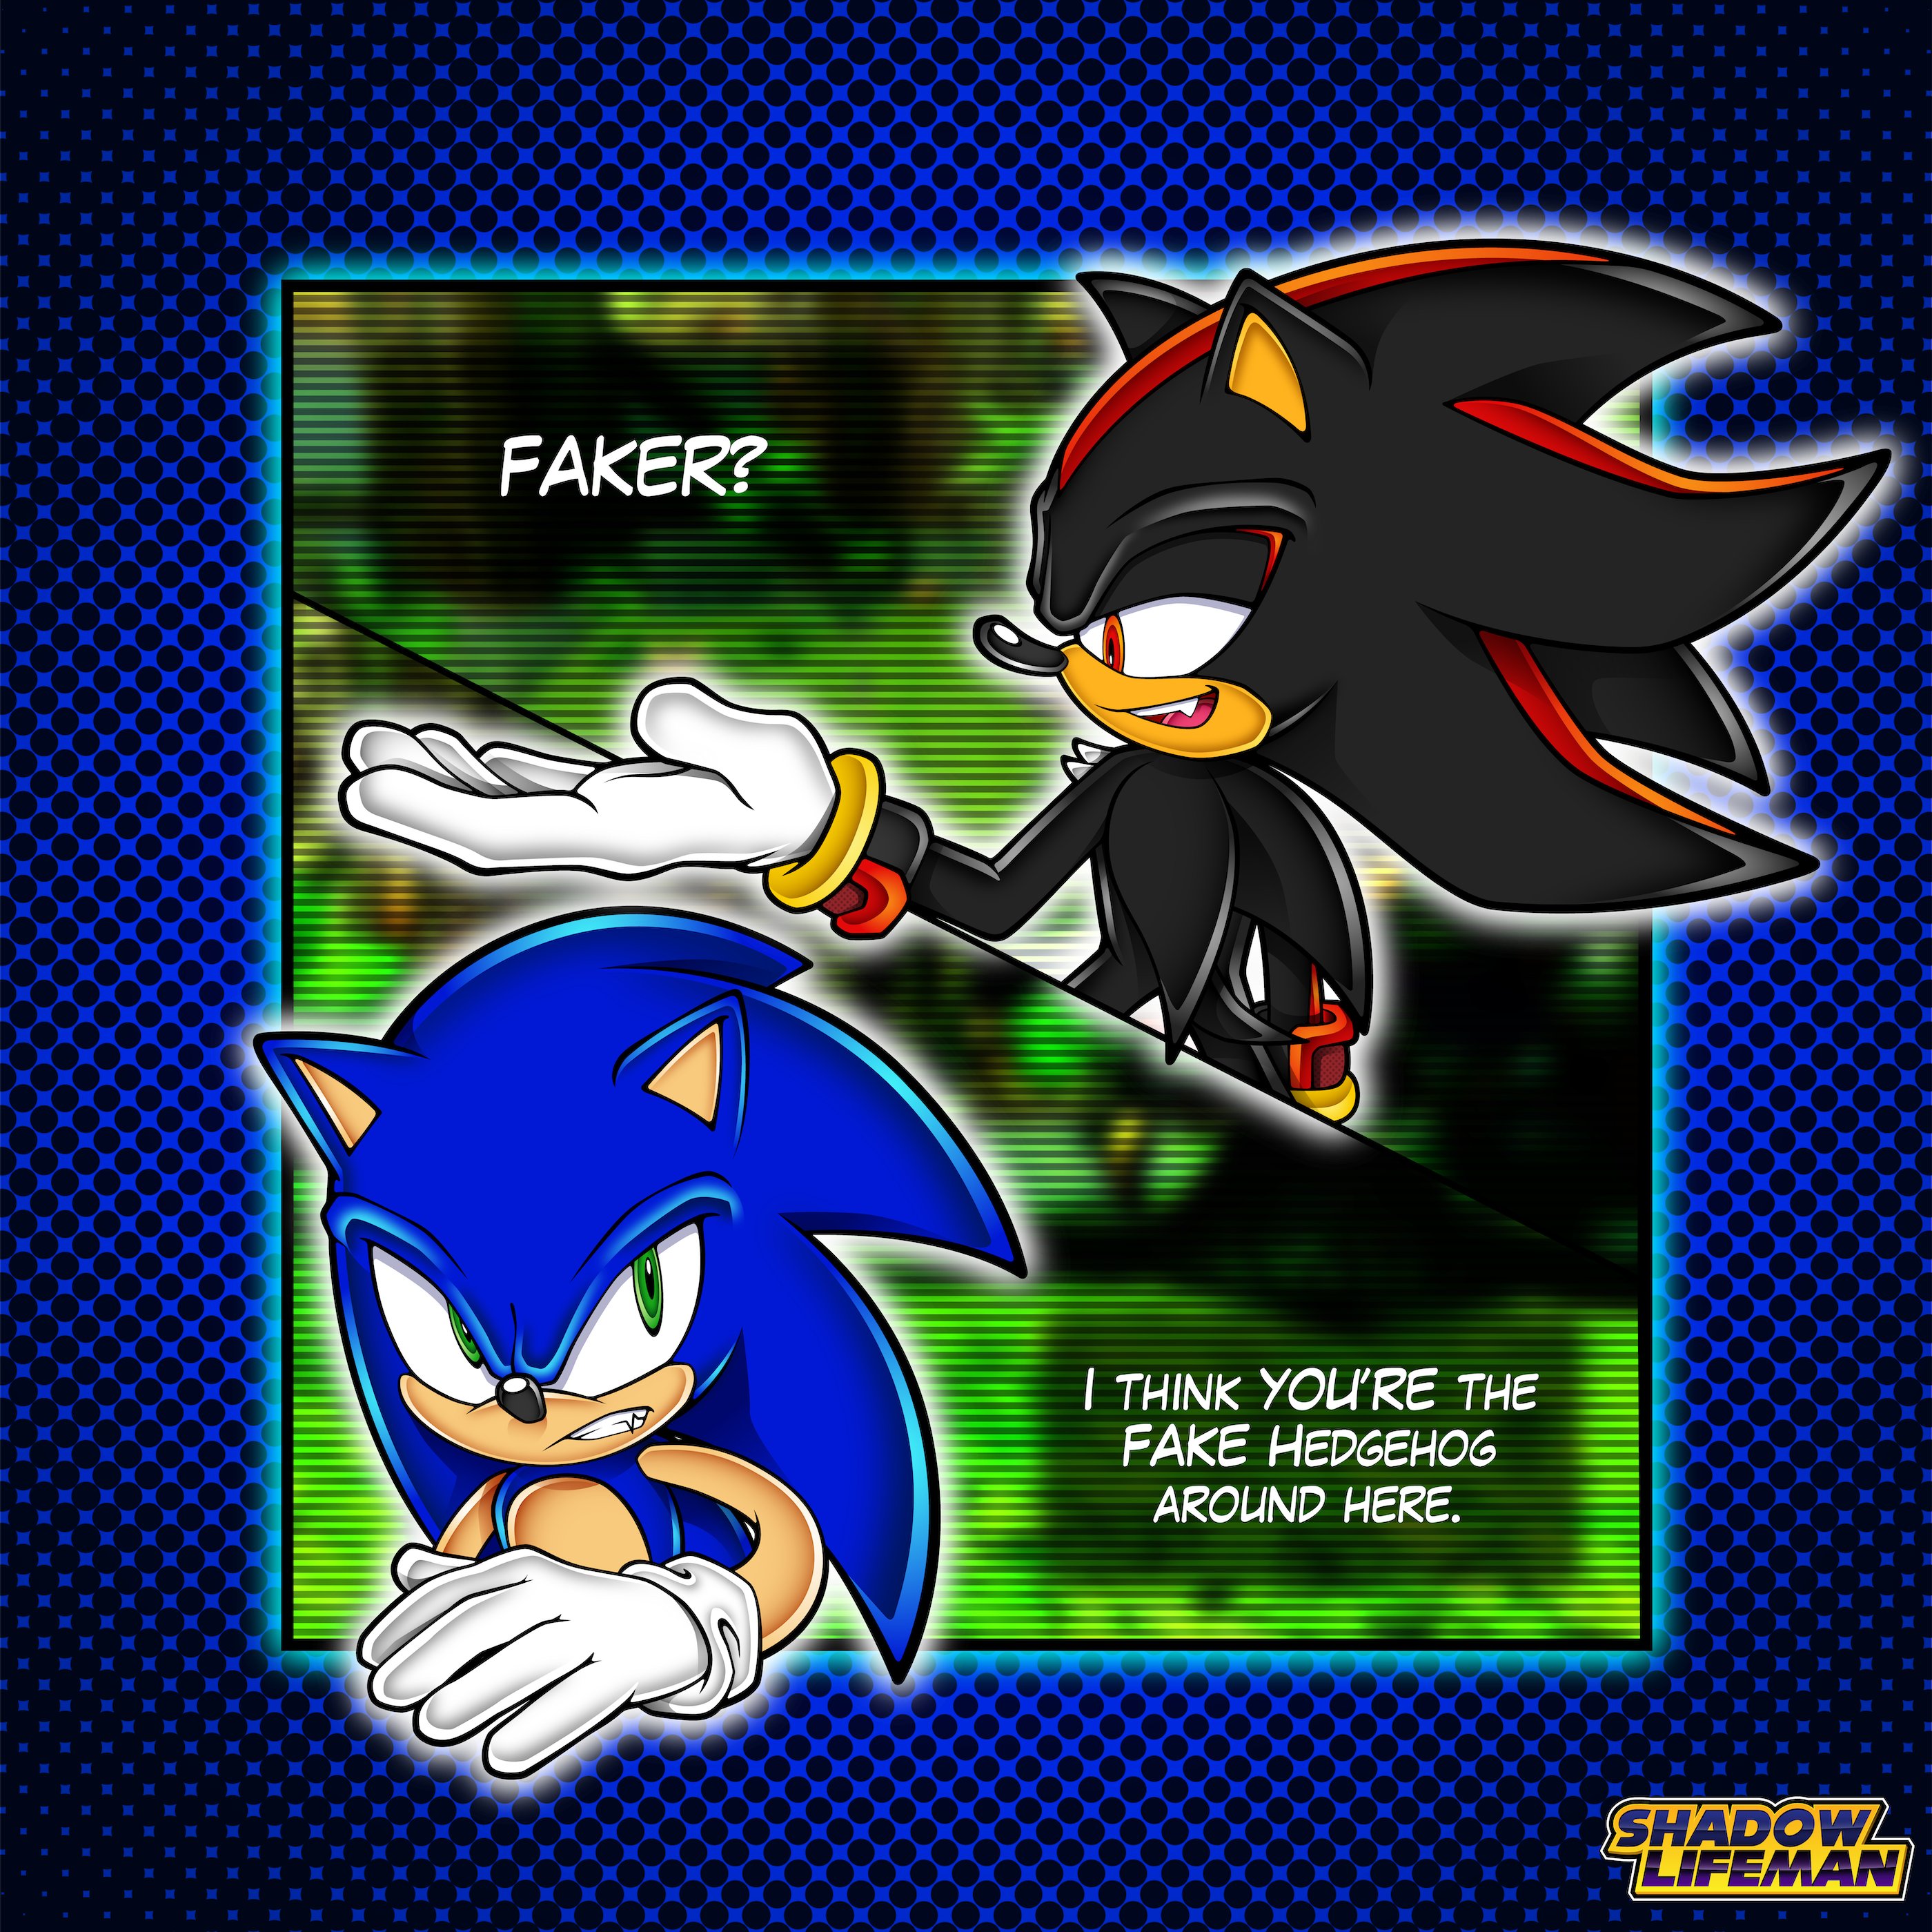 Sonic vs Shadow (Sonic Adventure 2)